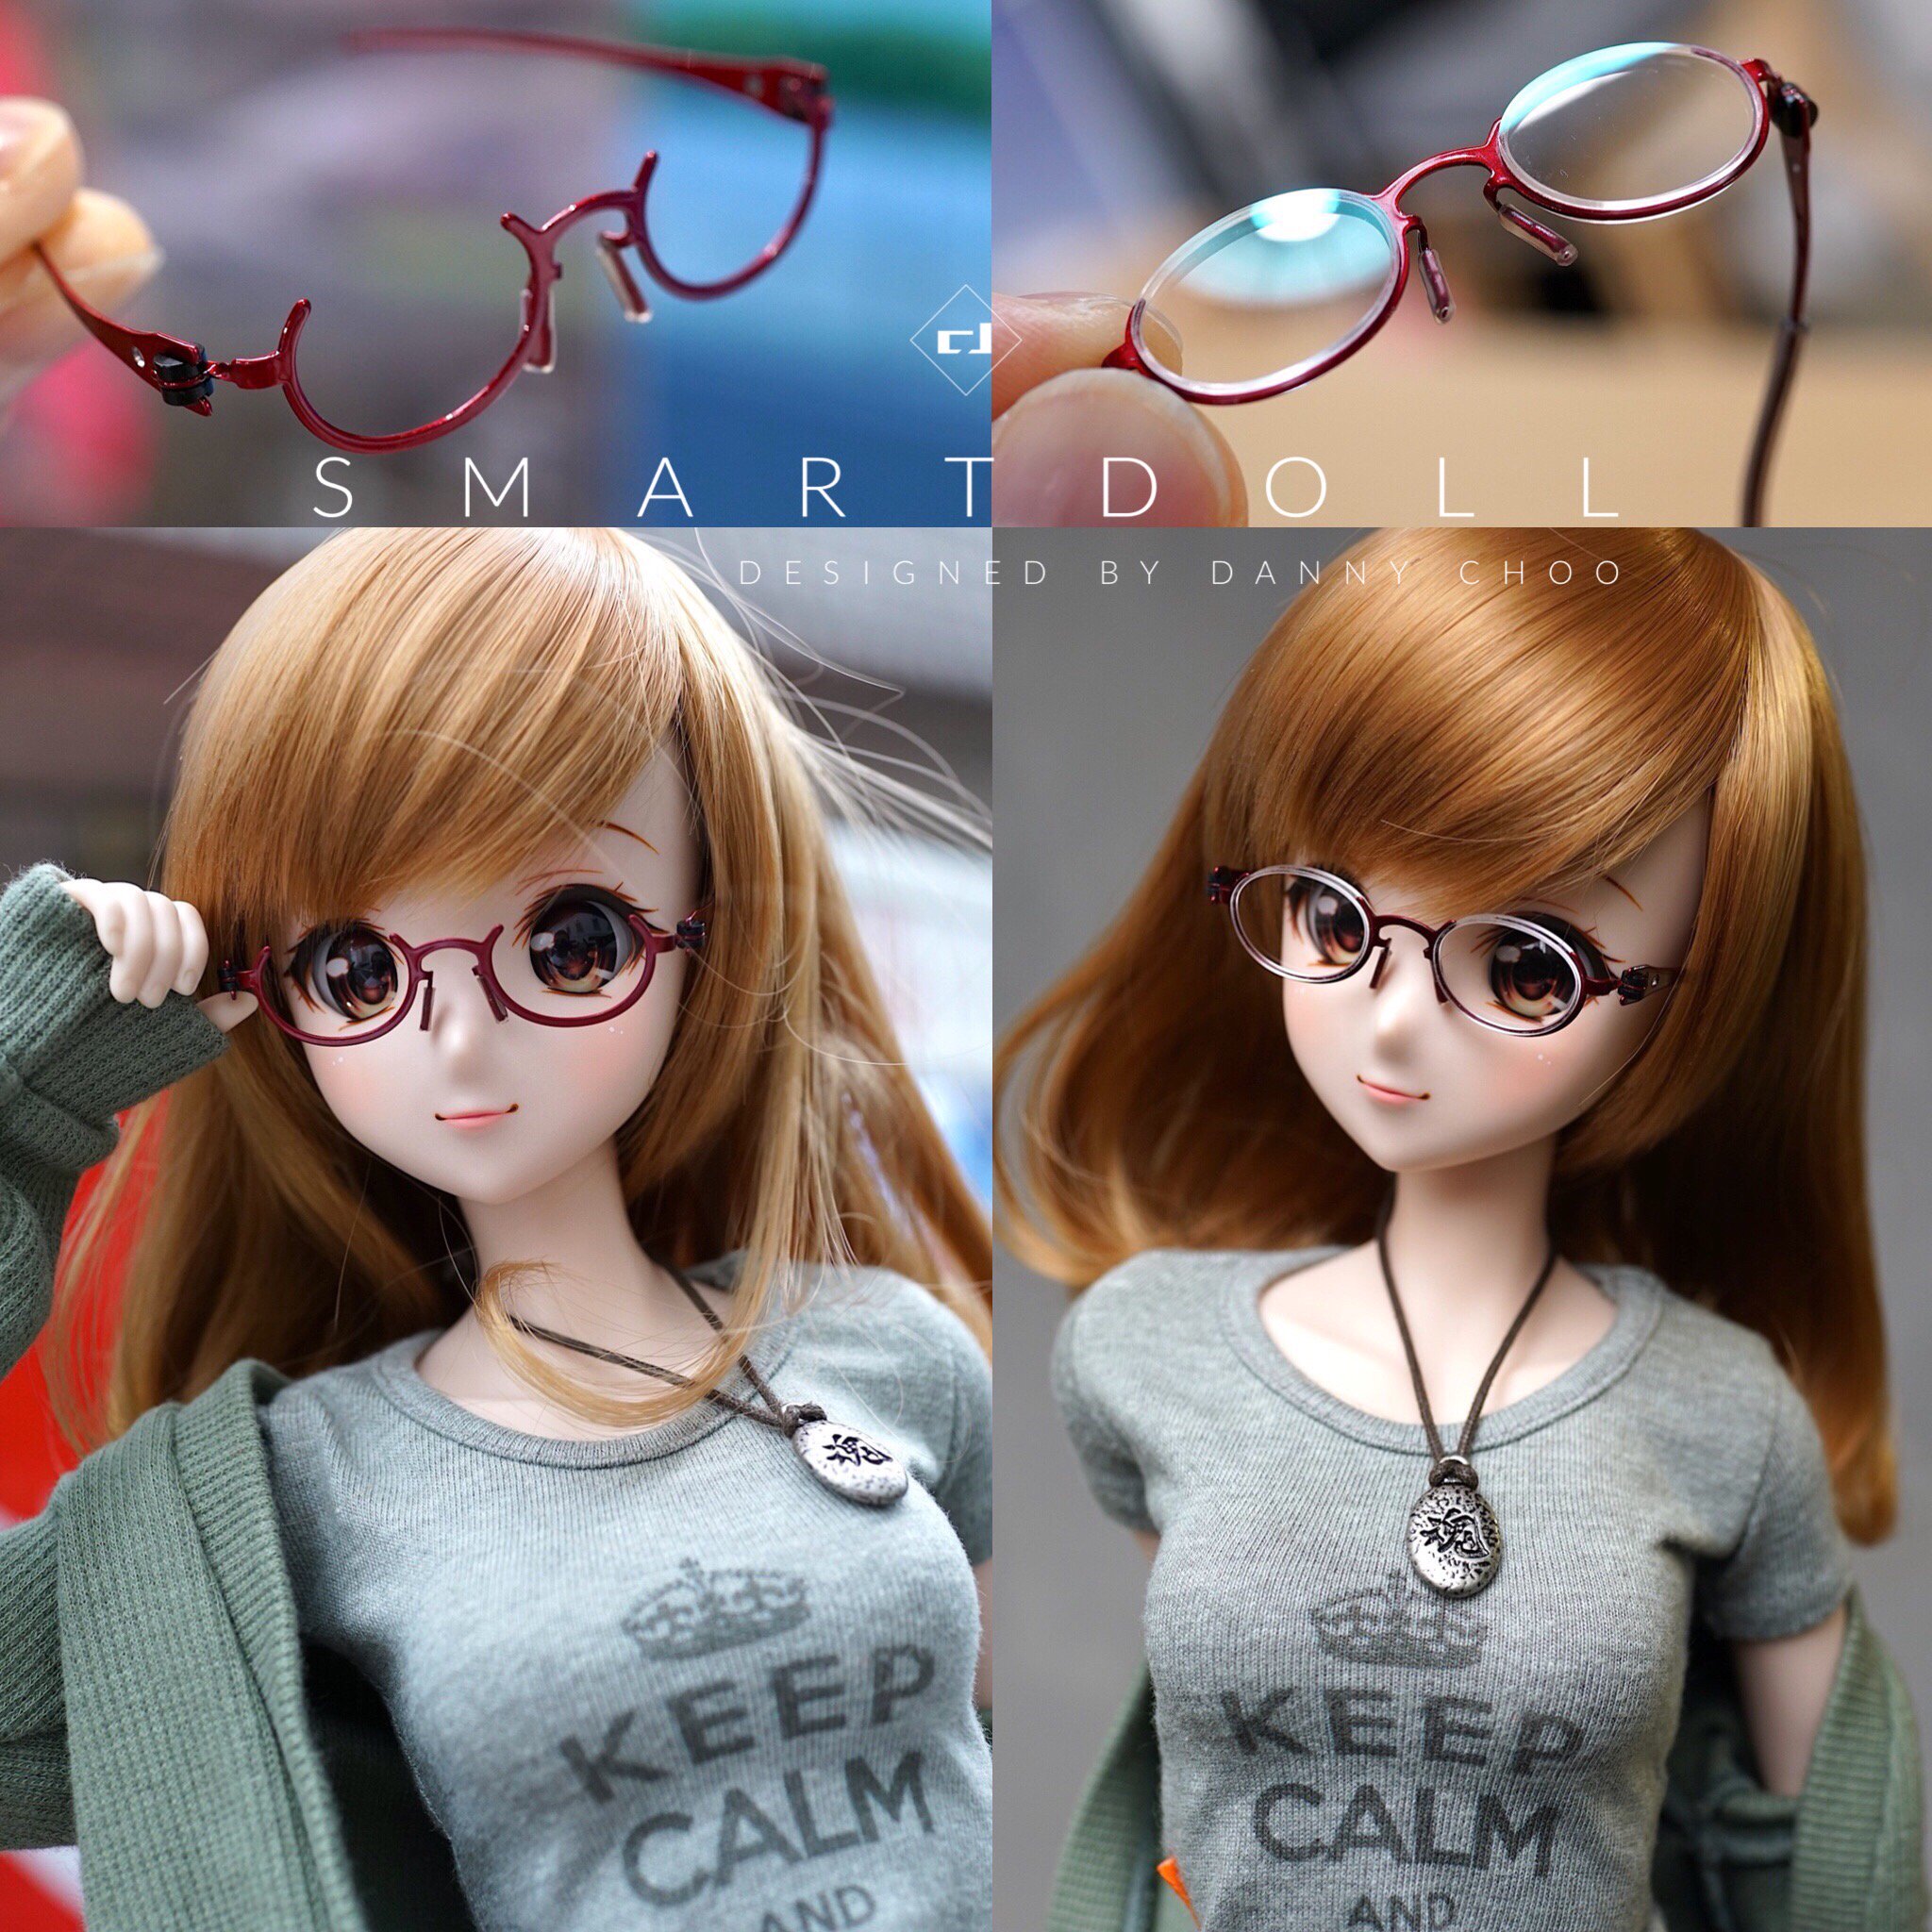 Black Round Glasses 18 inch American Girl or Boy Doll Accessory